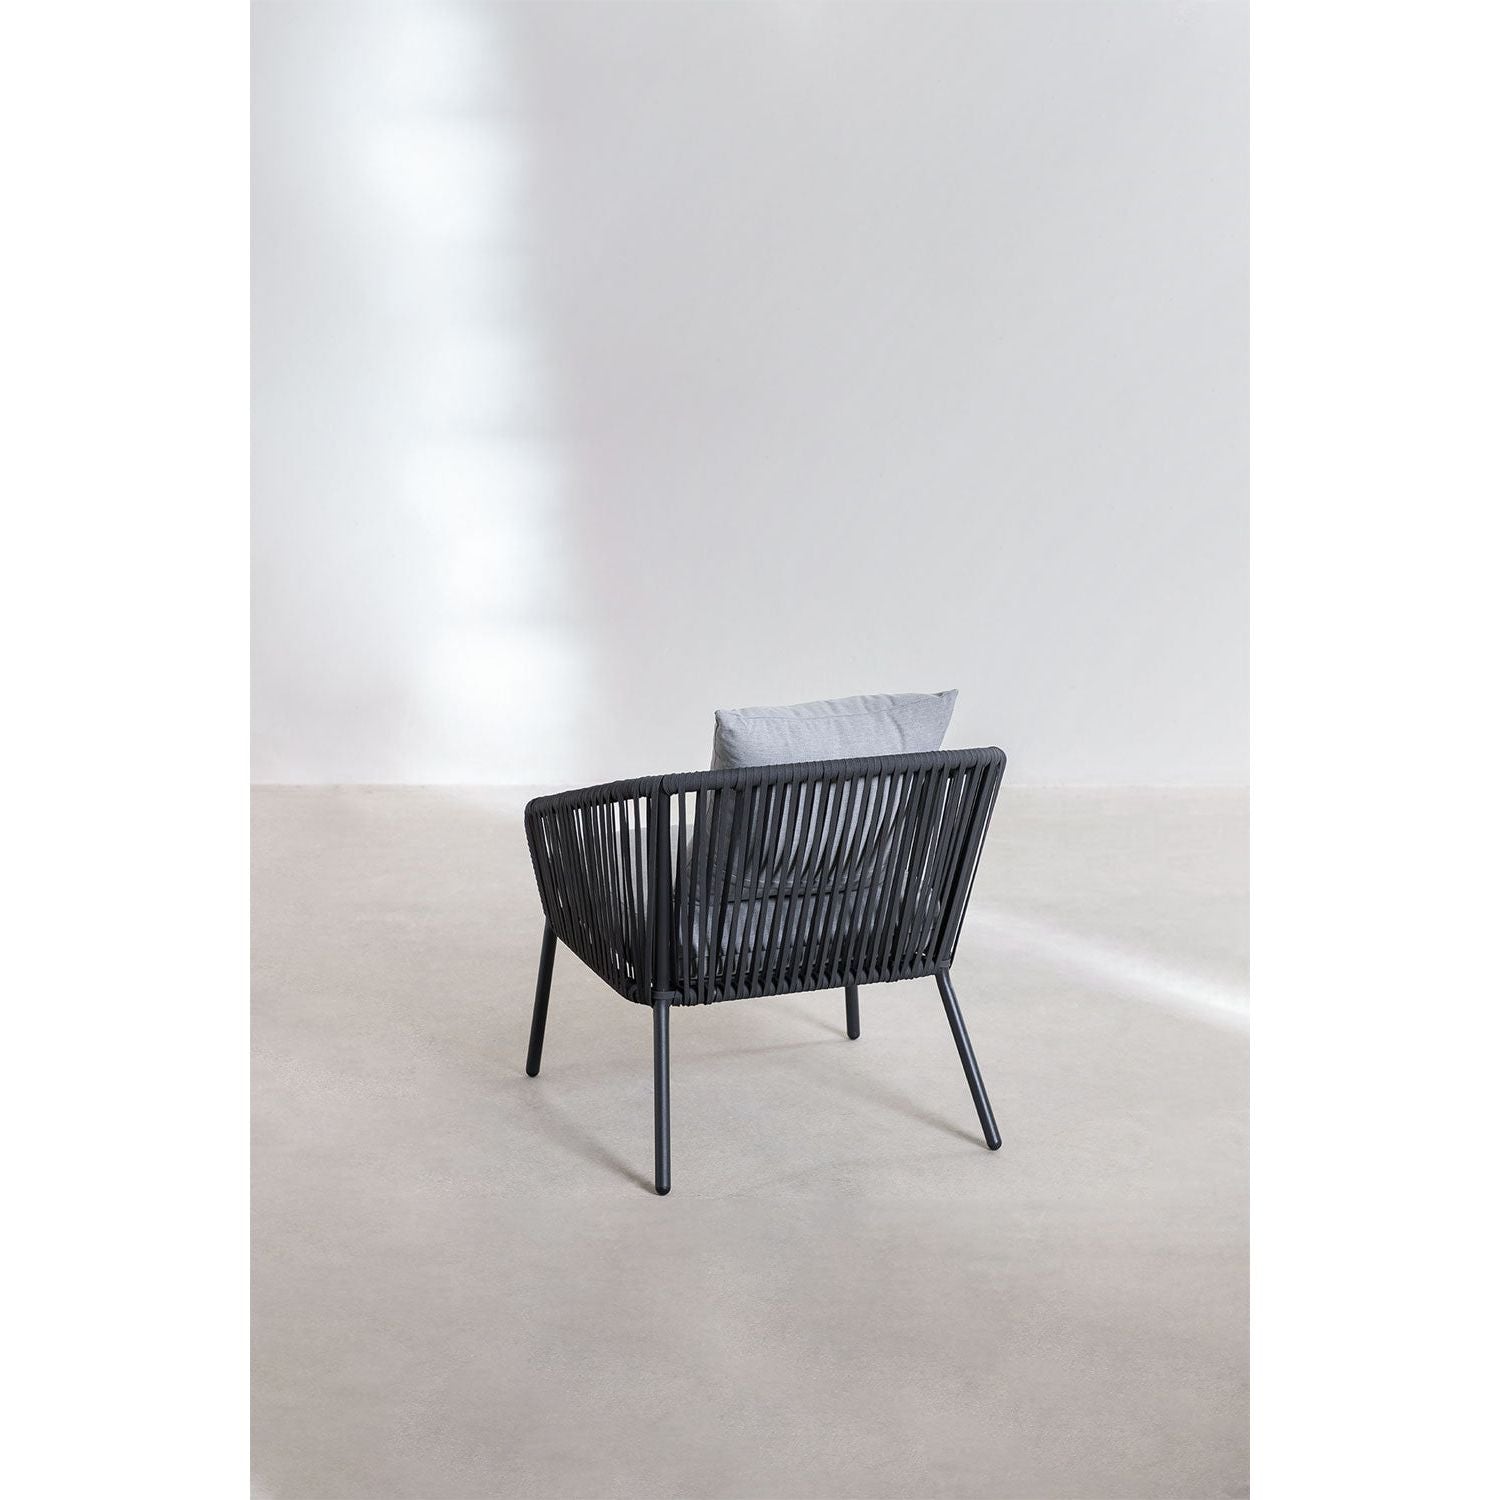 Lauko baldų komplektas ARTIZAN, aliuminis, pilka spalva